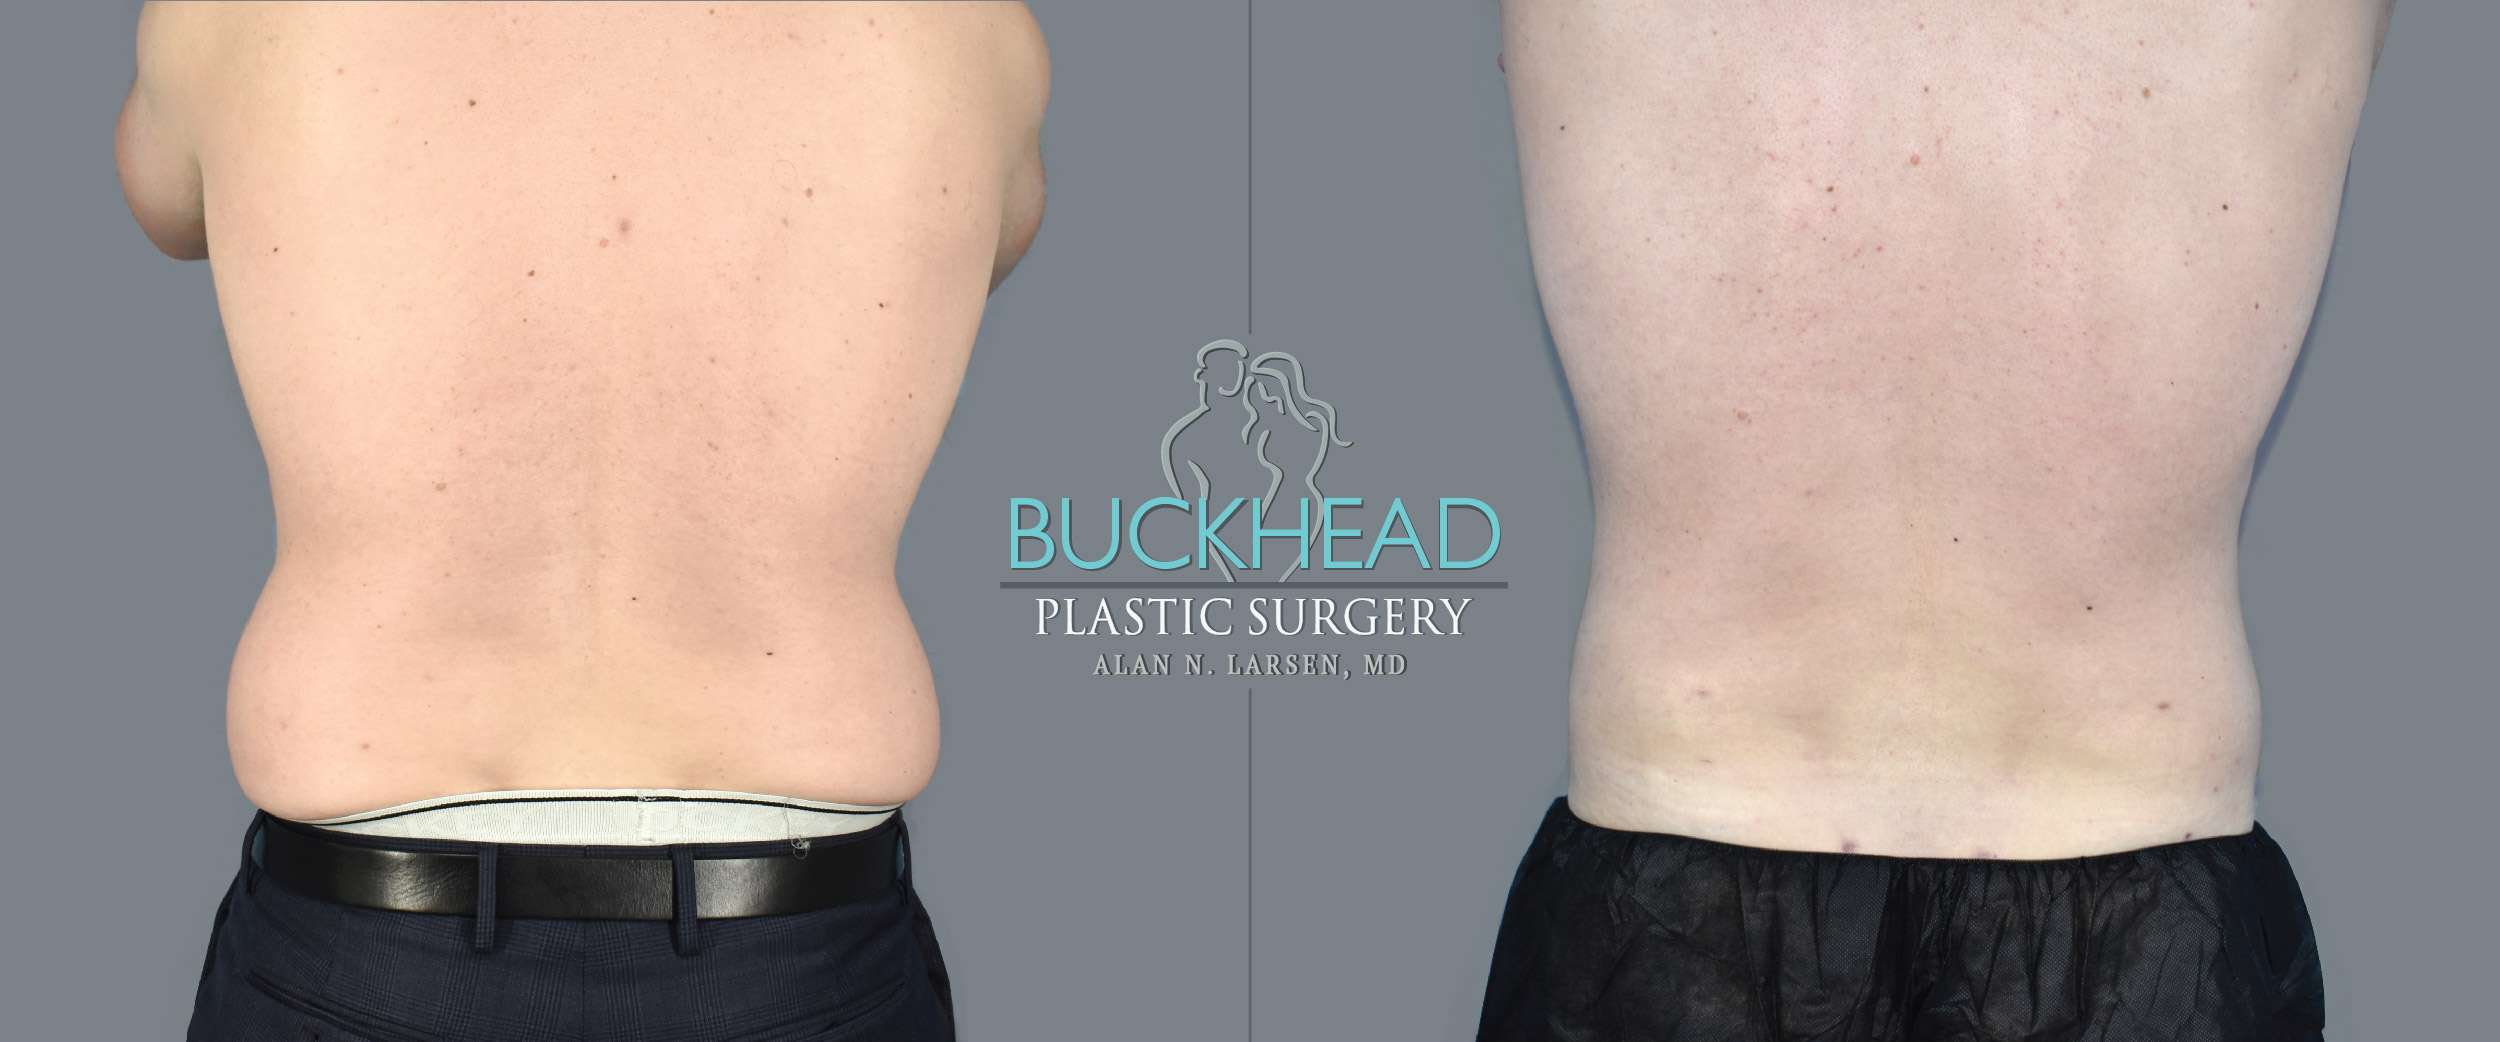 Before and After Photo Gallery | Liposuction | Buckhead Plastic Surgery | Alan N. Larsen, MD | Double Board-Certified Plastic Surgeon | Atlanta GA